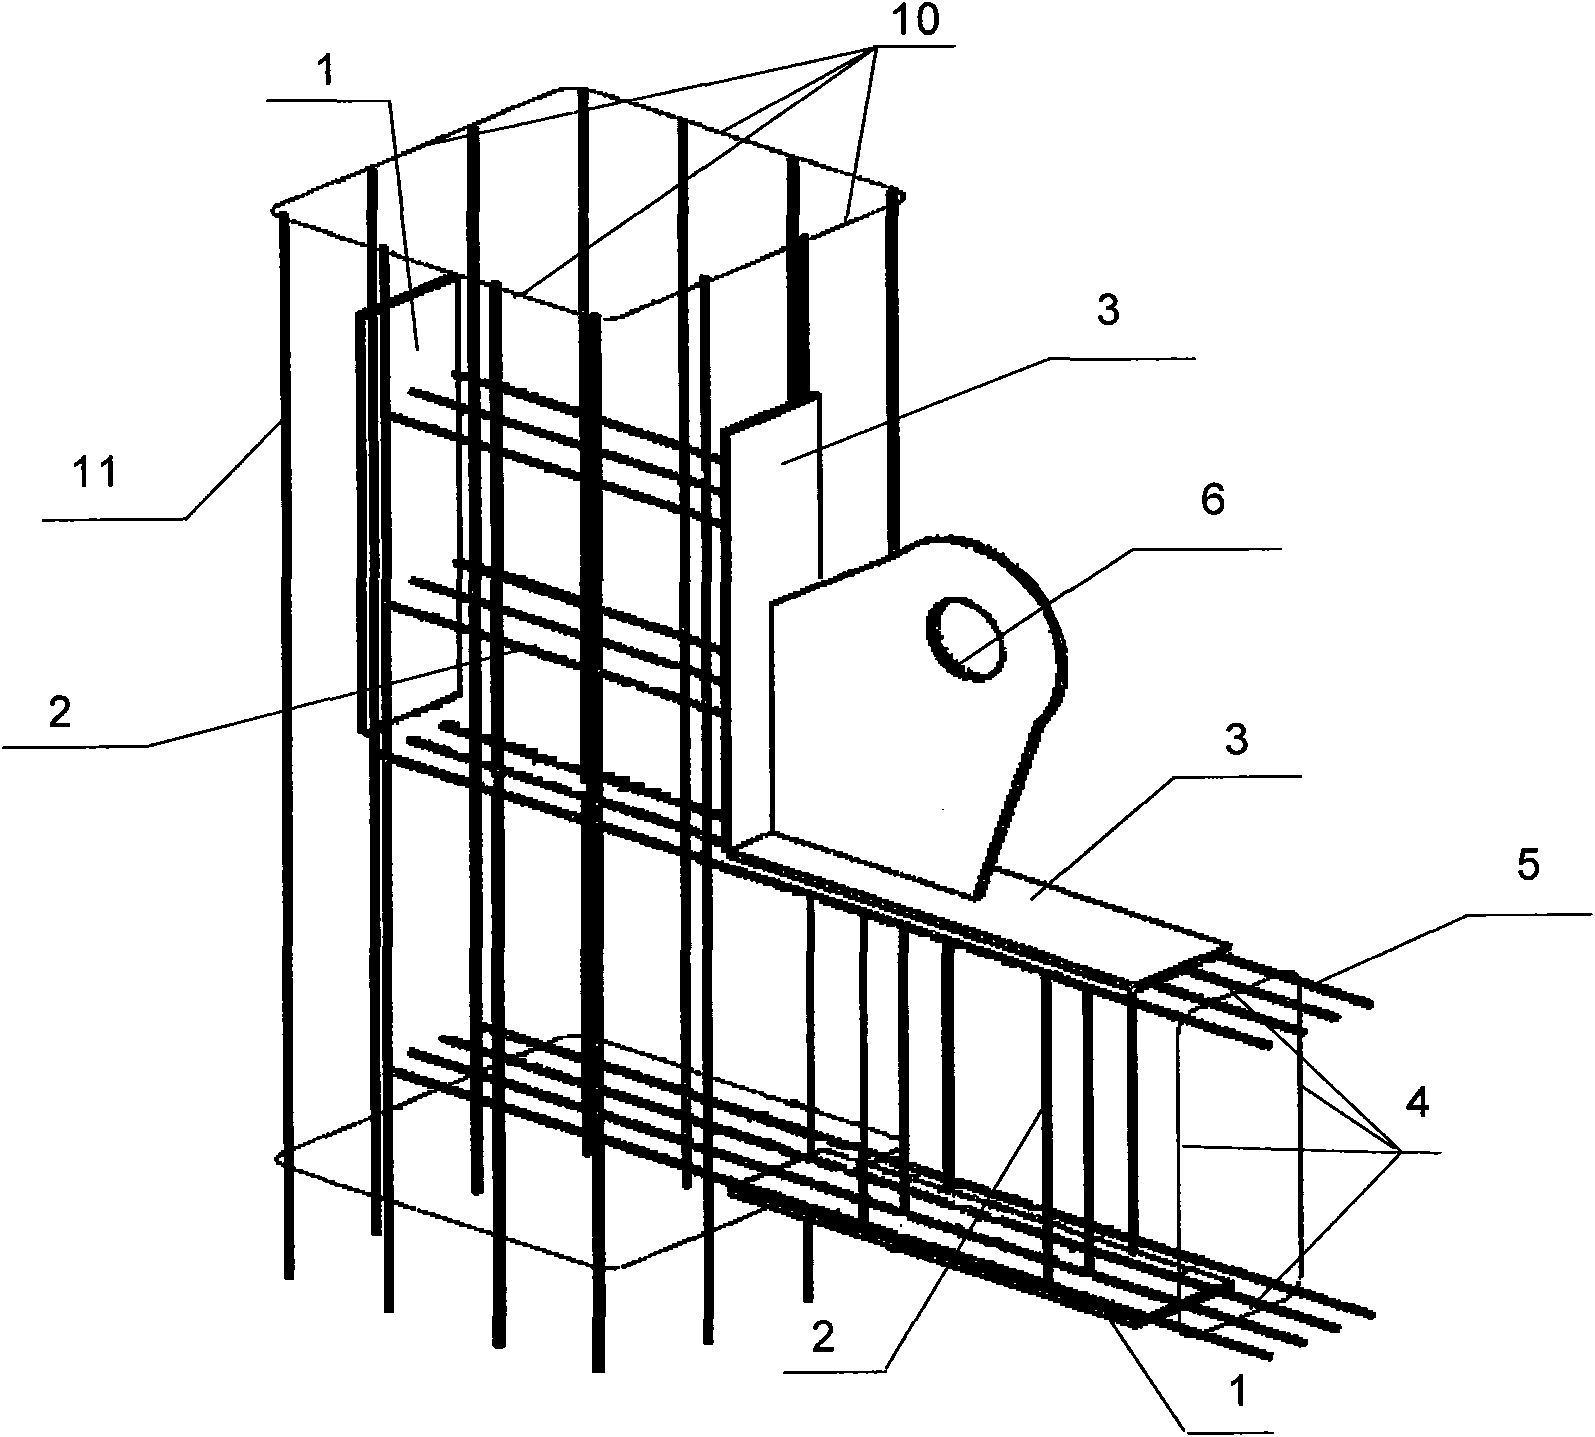 Vertical reinforced concrete component-connection node of buckling-restrained brace